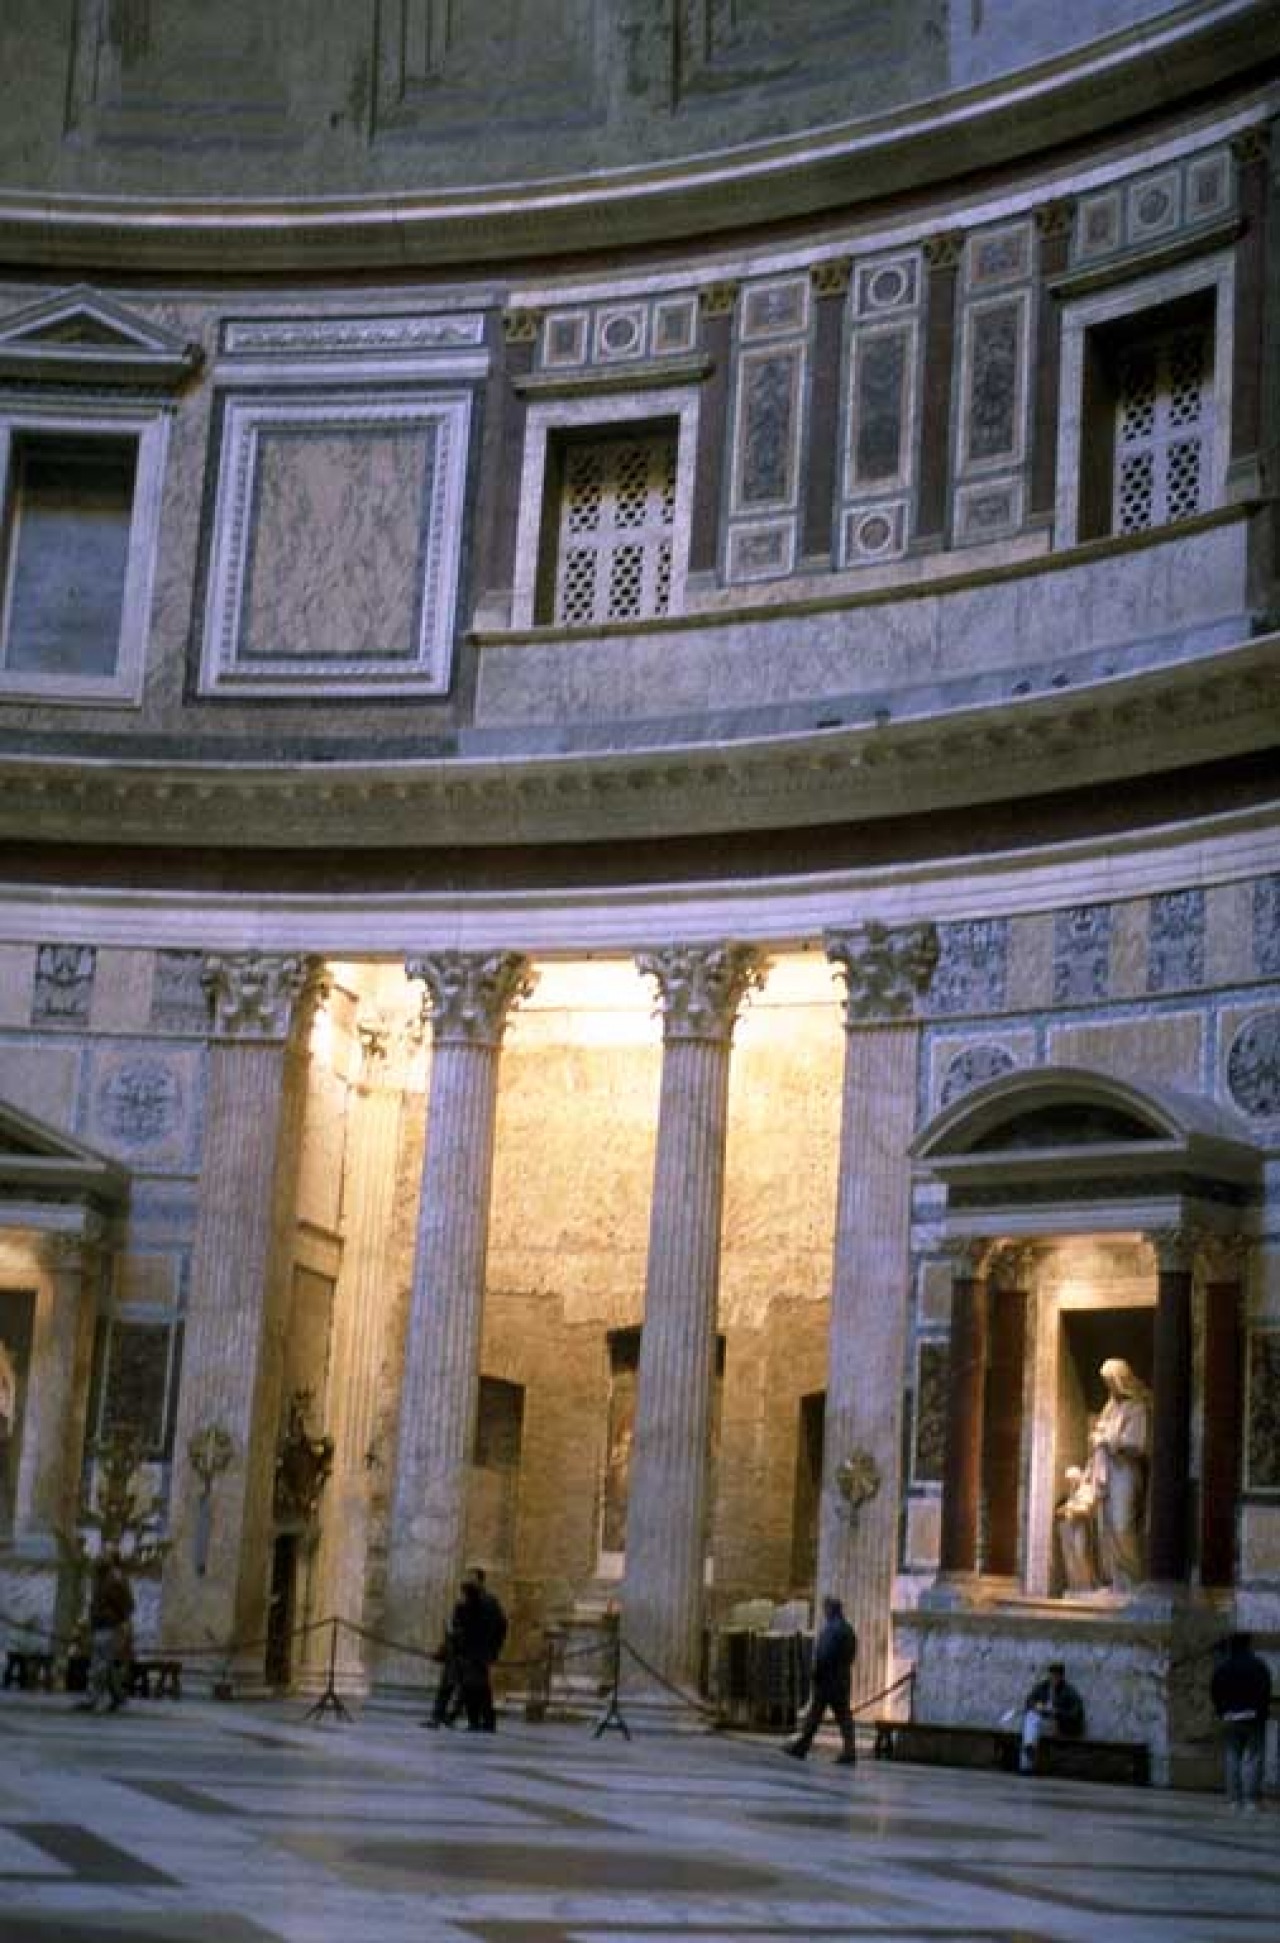 pantheon interior description